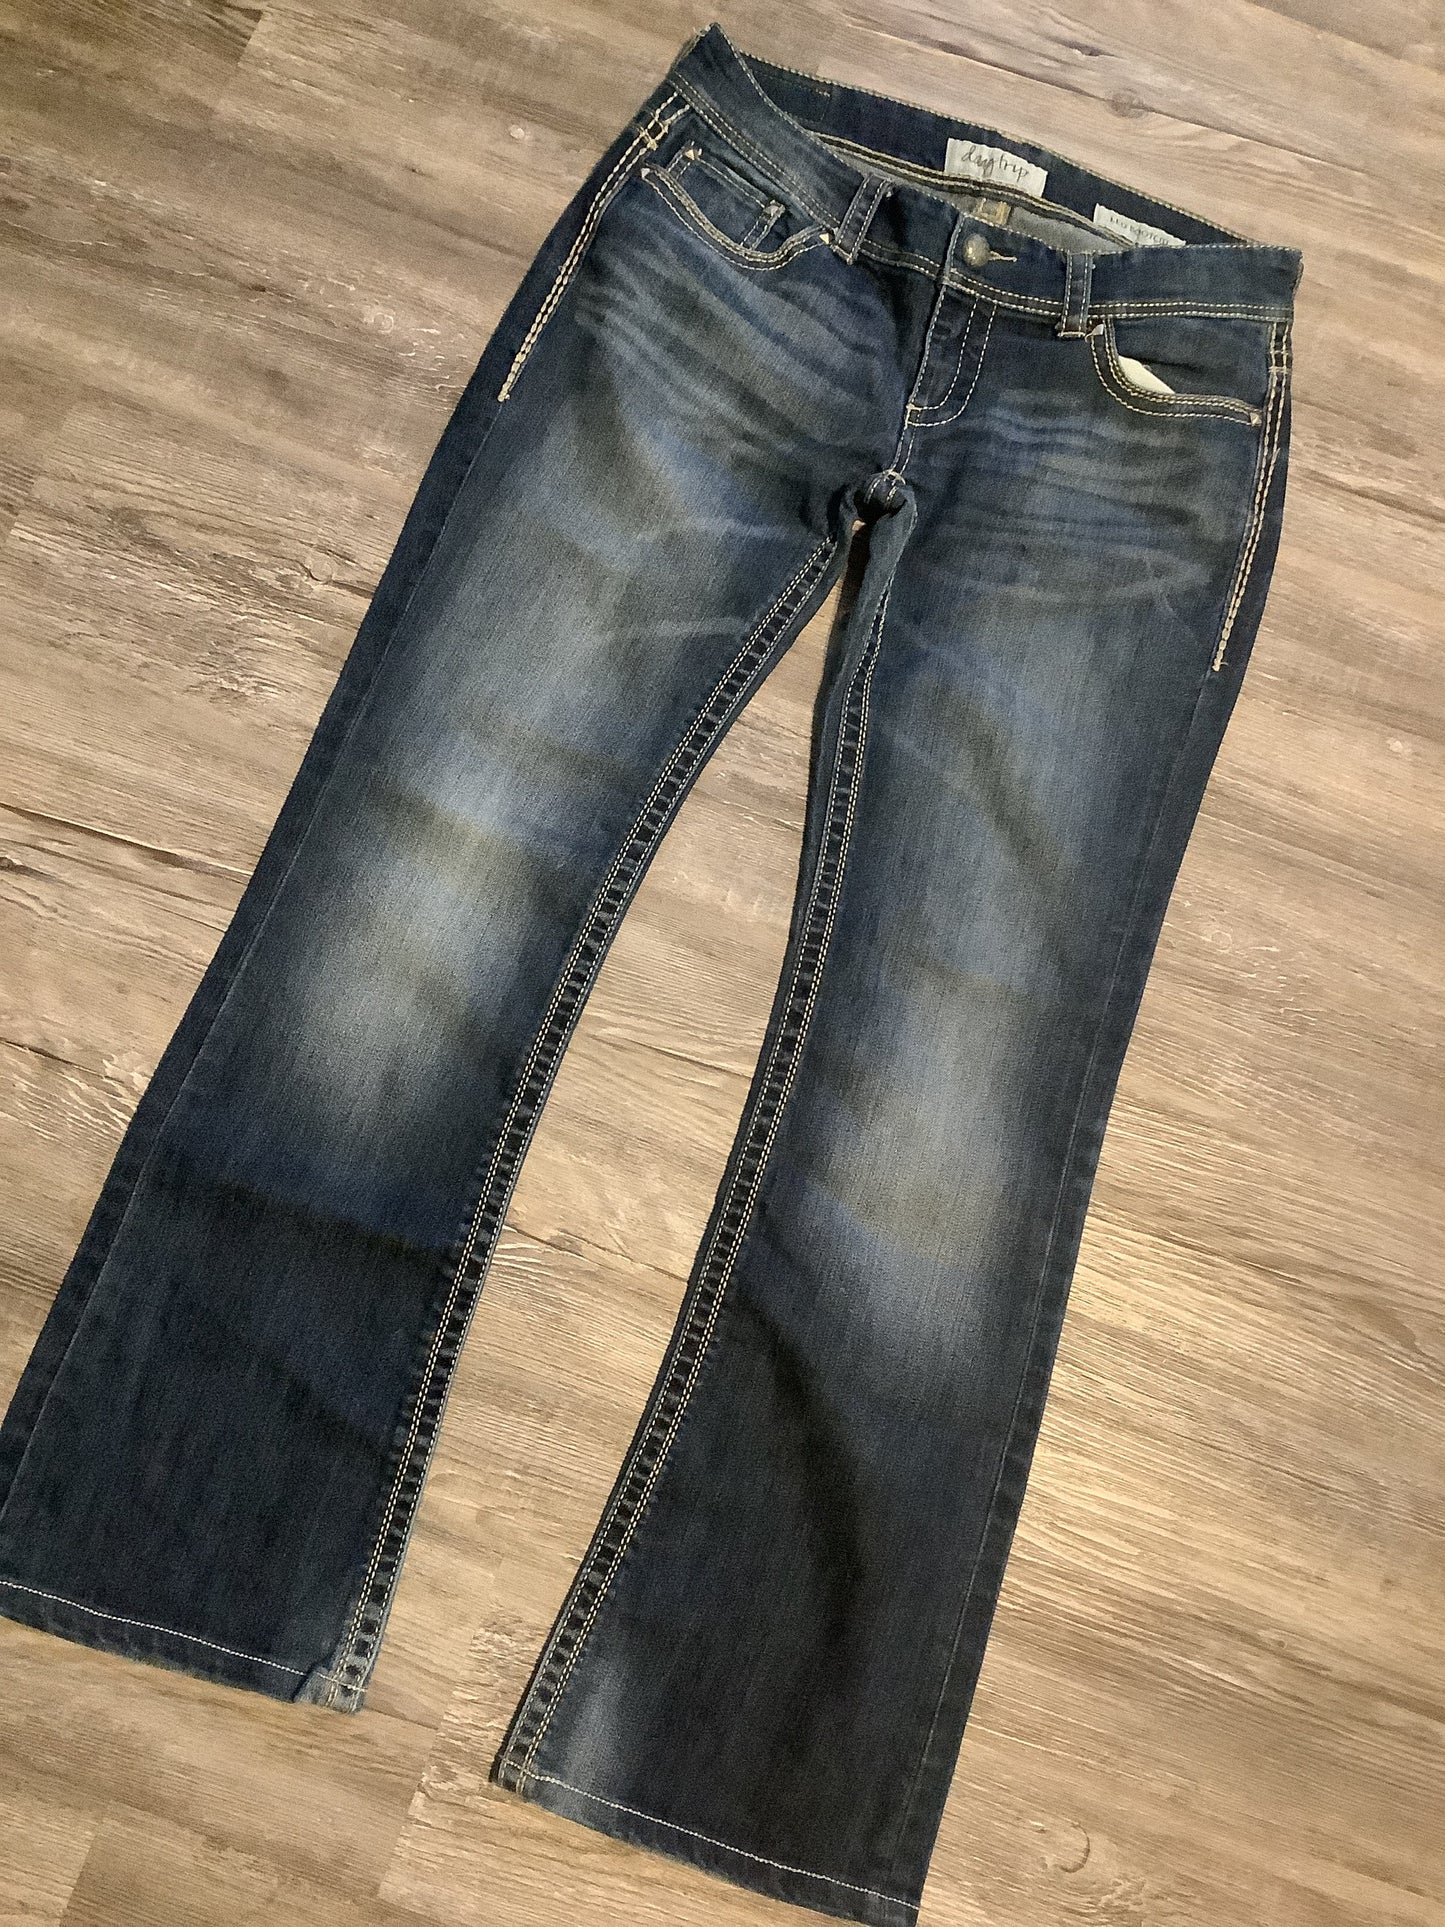 Blue Jeans Boot Cut Daytrip, Size 8